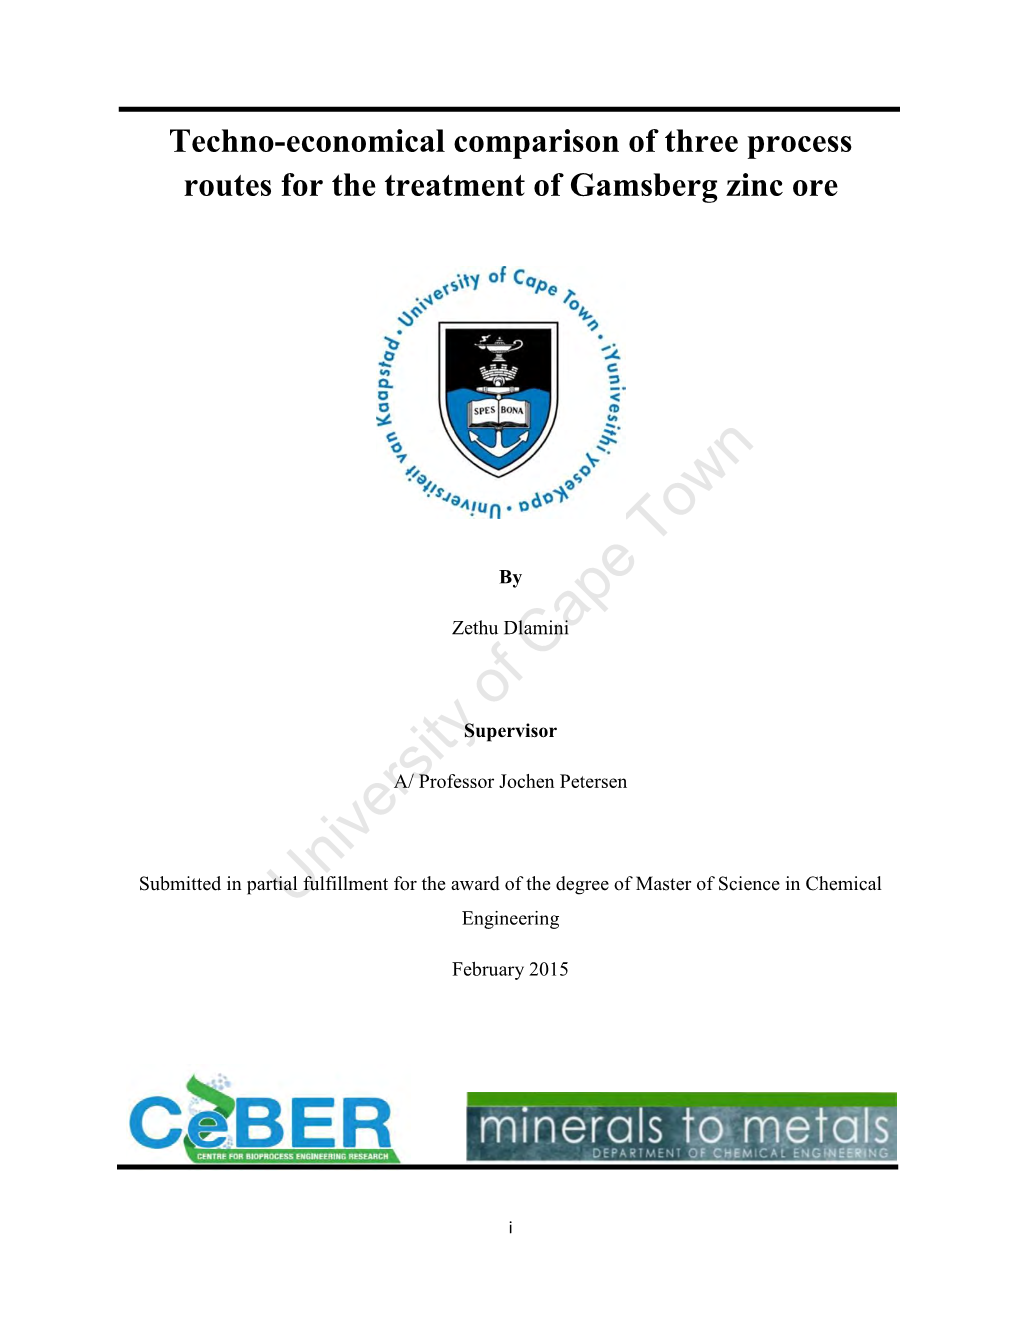 Techno-Economical Comparison of Three Process Routes for the Treatment of Gamsberg Zinc Ore